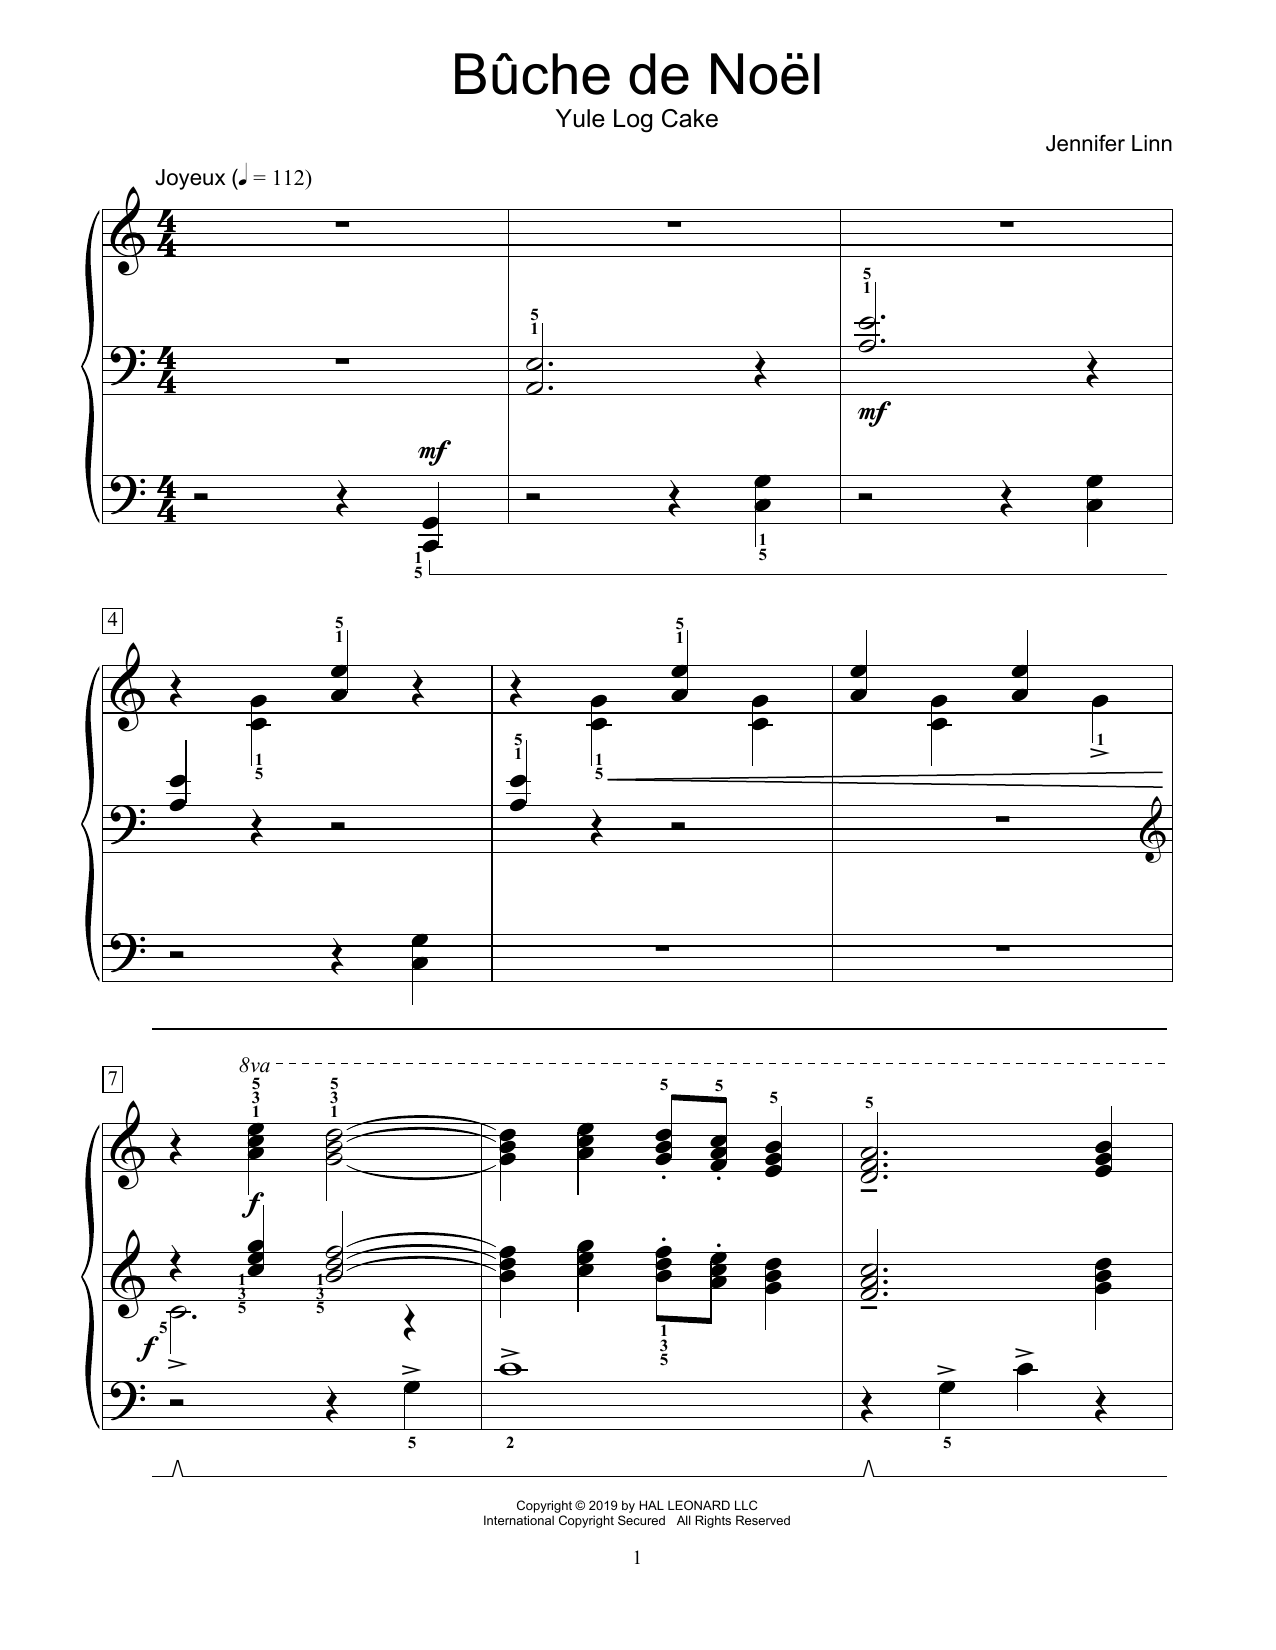 Download Jennifer Linn Buche de Noel Sheet Music and learn how to play Educational Piano PDF digital score in minutes